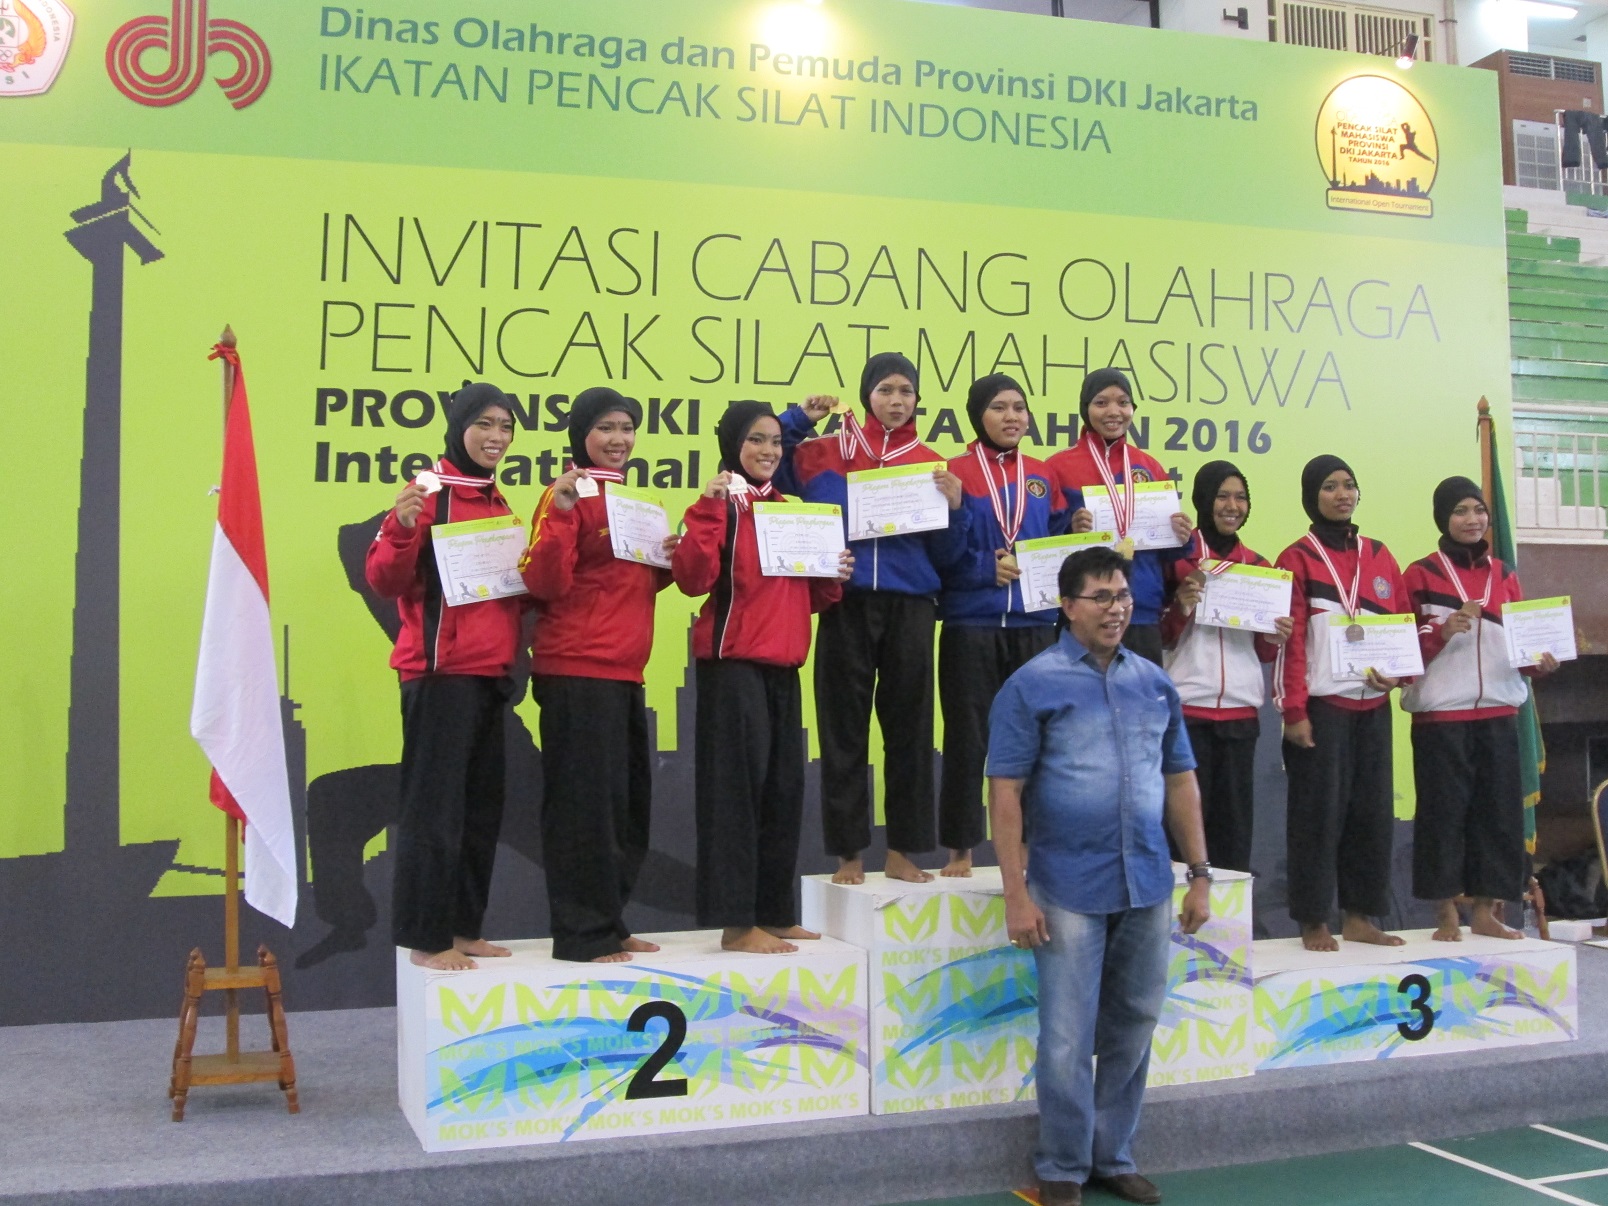 Foto invitasi cabang olahraga pencak silat mahasiswa dan ipsi internasional open tournamen provinsi dki jakarta